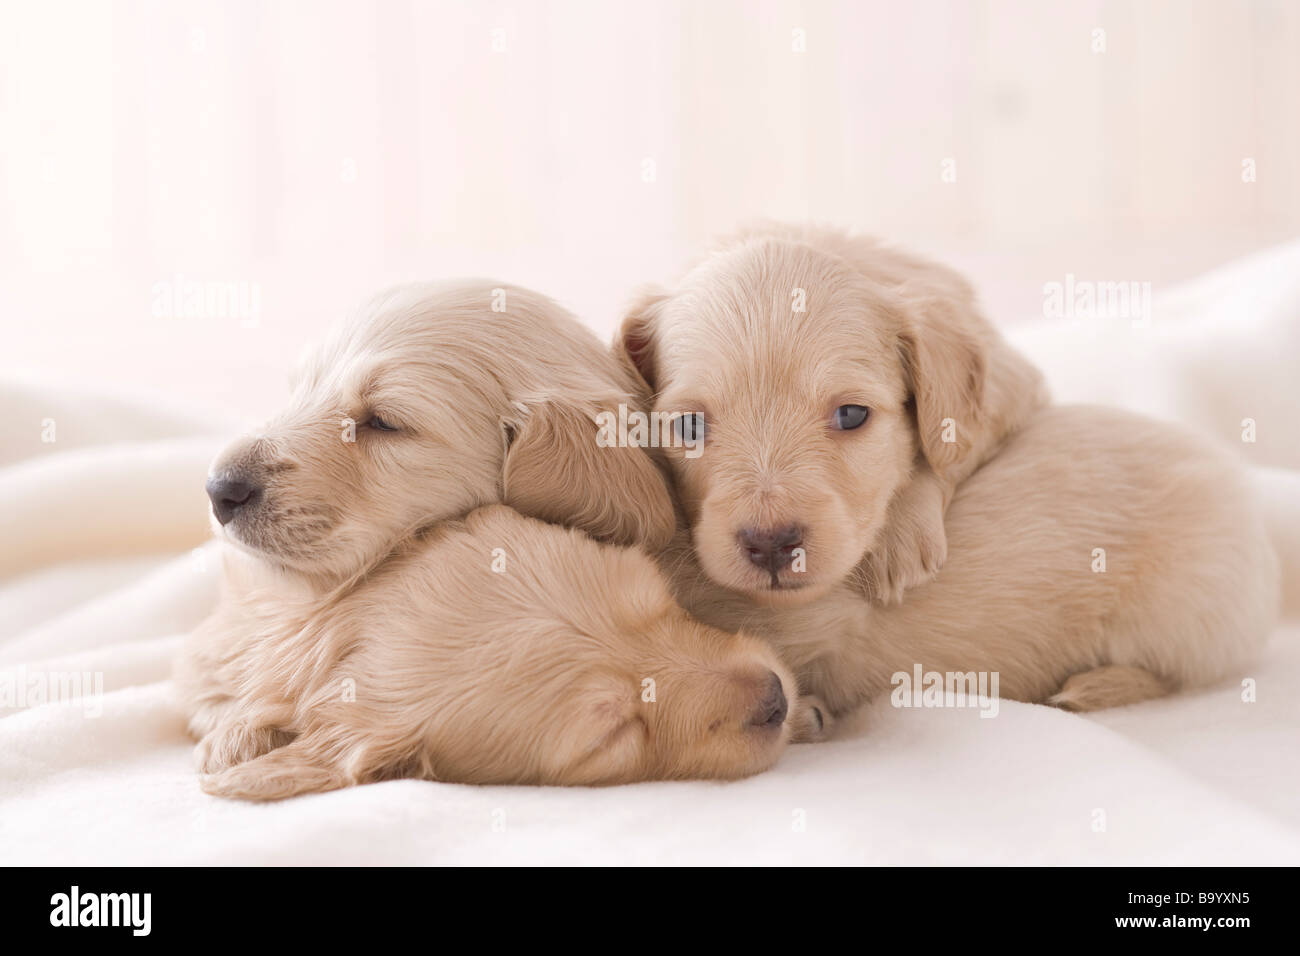 Three miniature dachshund sleeping on a blanket Stock Photo